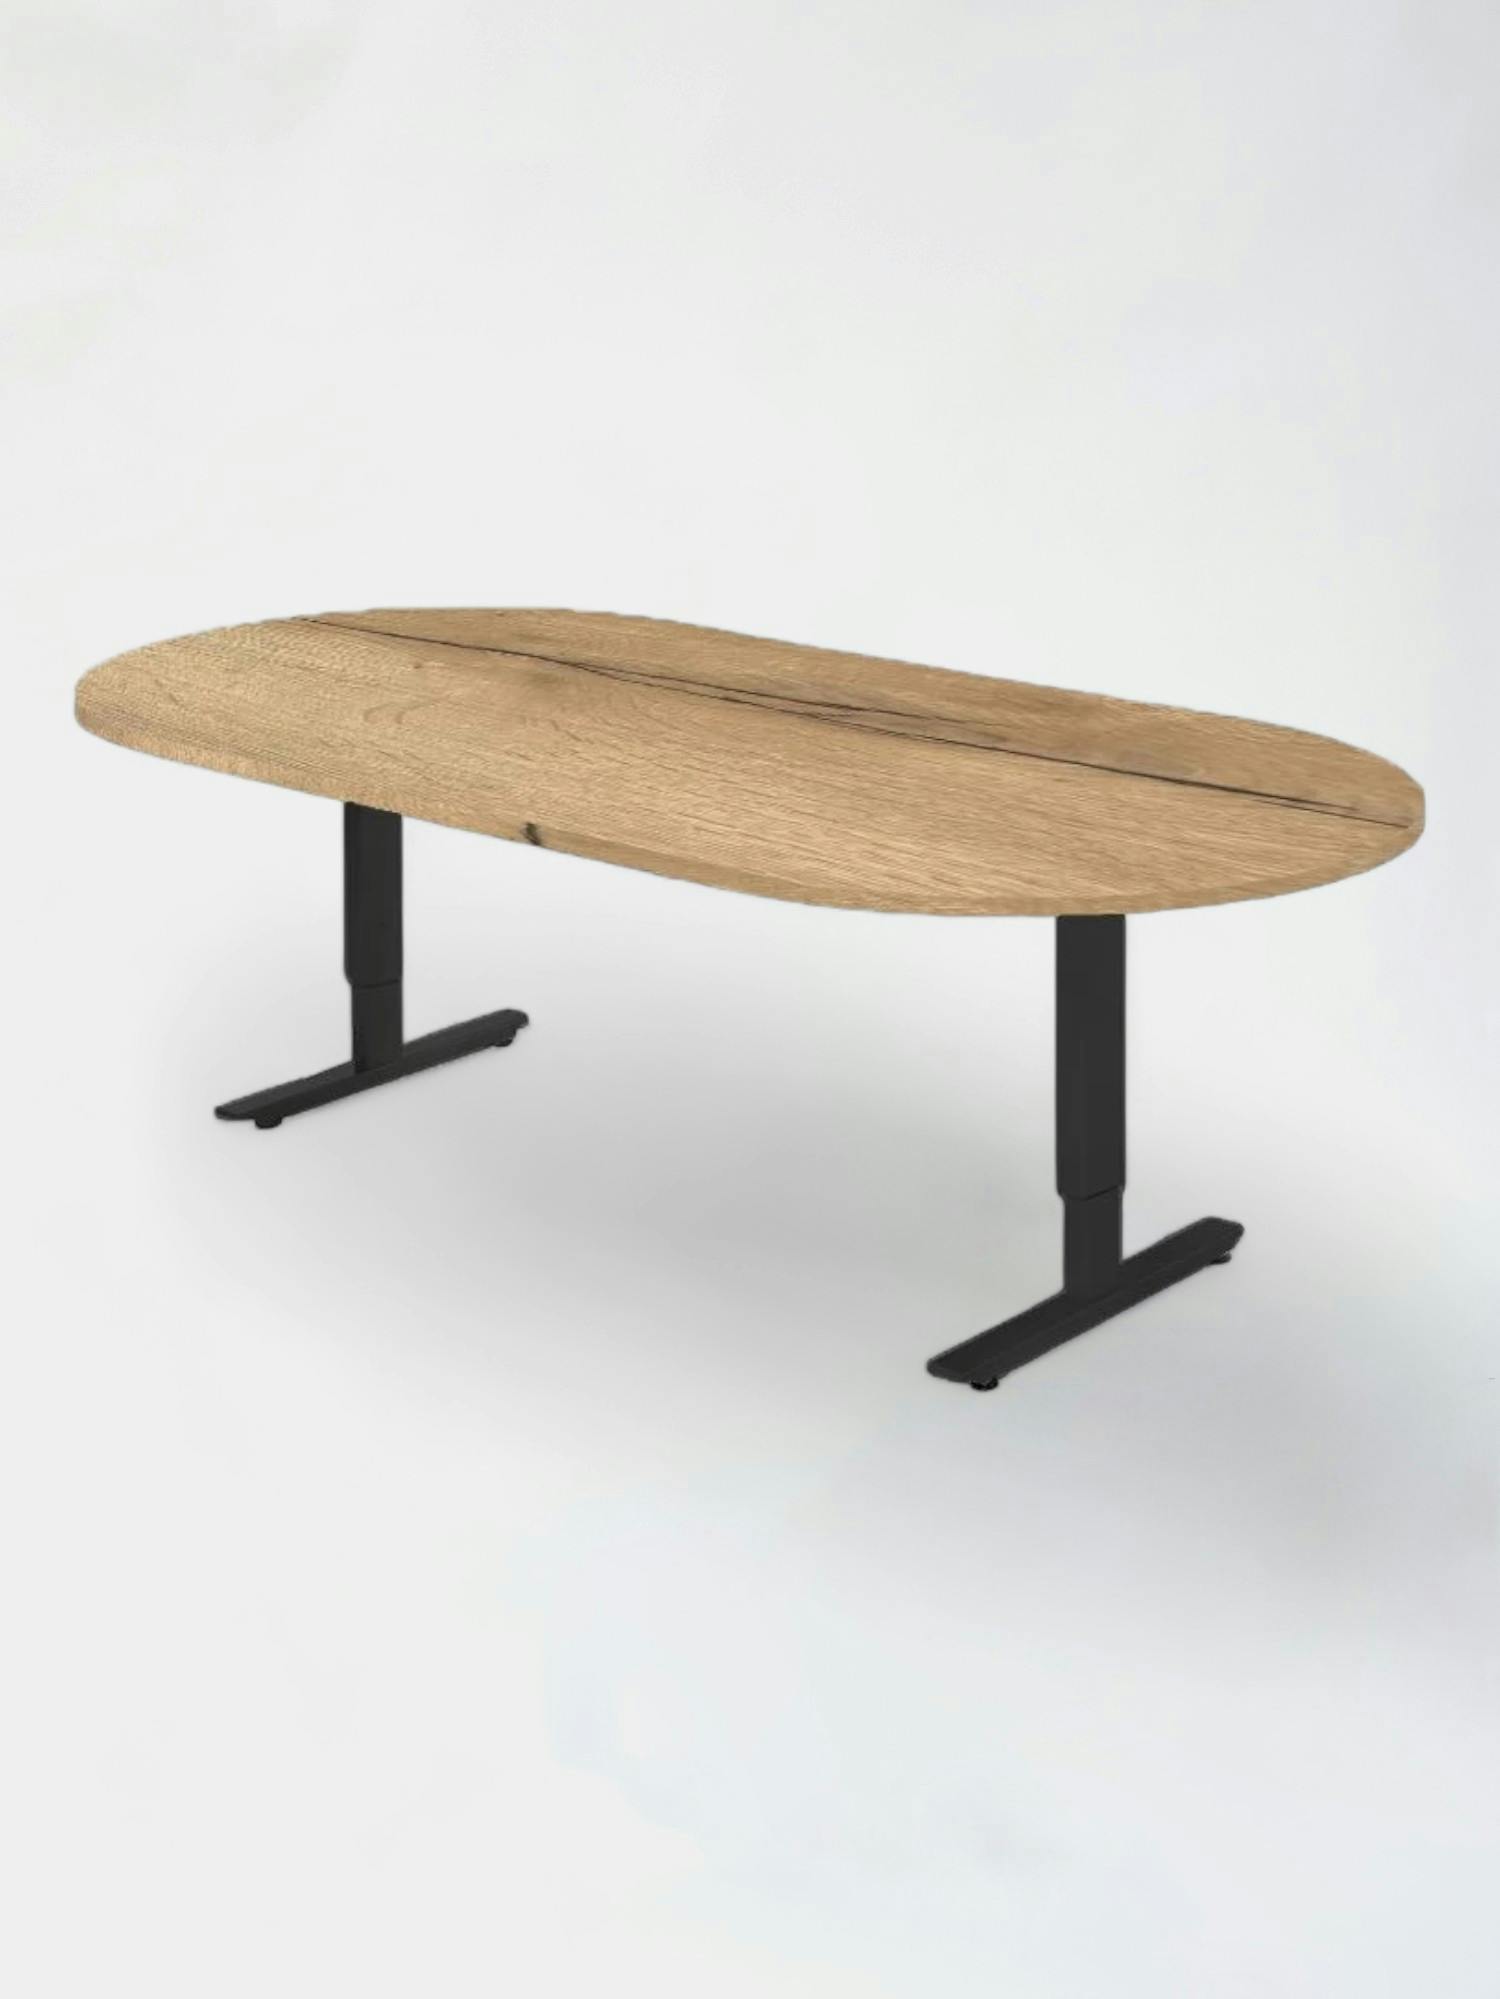 Ovale vergadertafel - Relieve Furniture